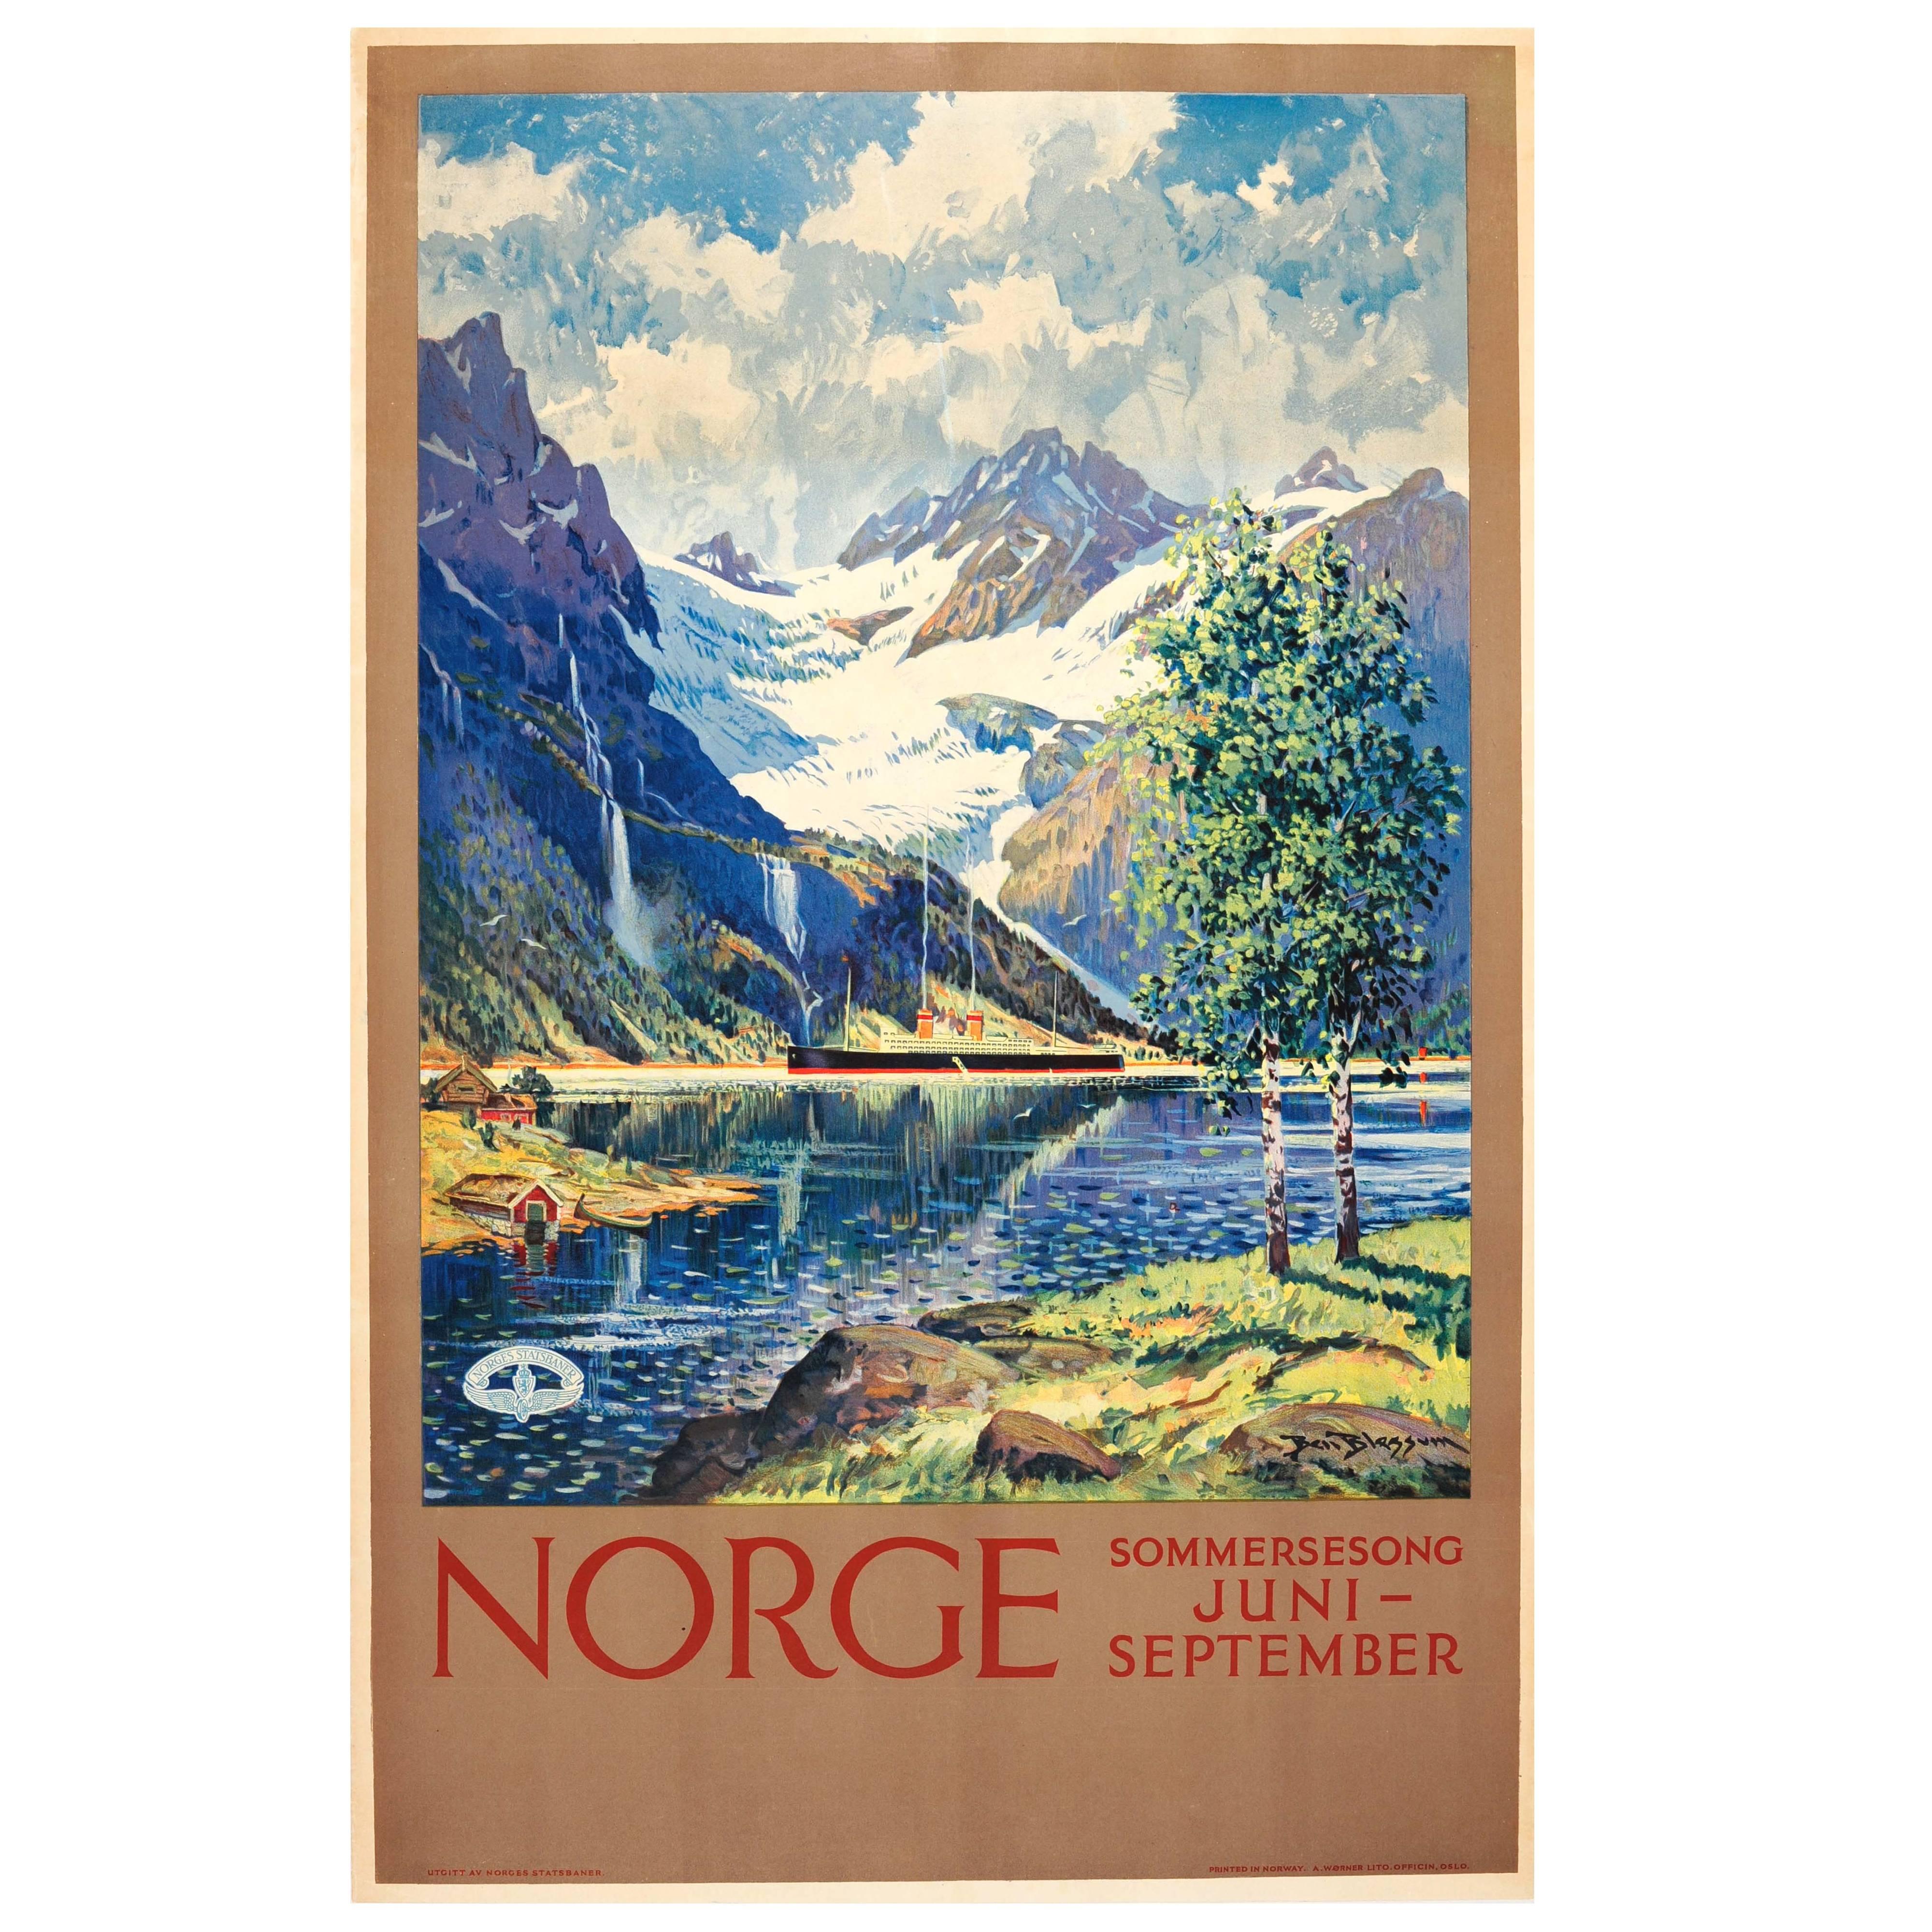 Original Vintage State Railway Travel Poster Norge Norway Summer Season ft Fjord